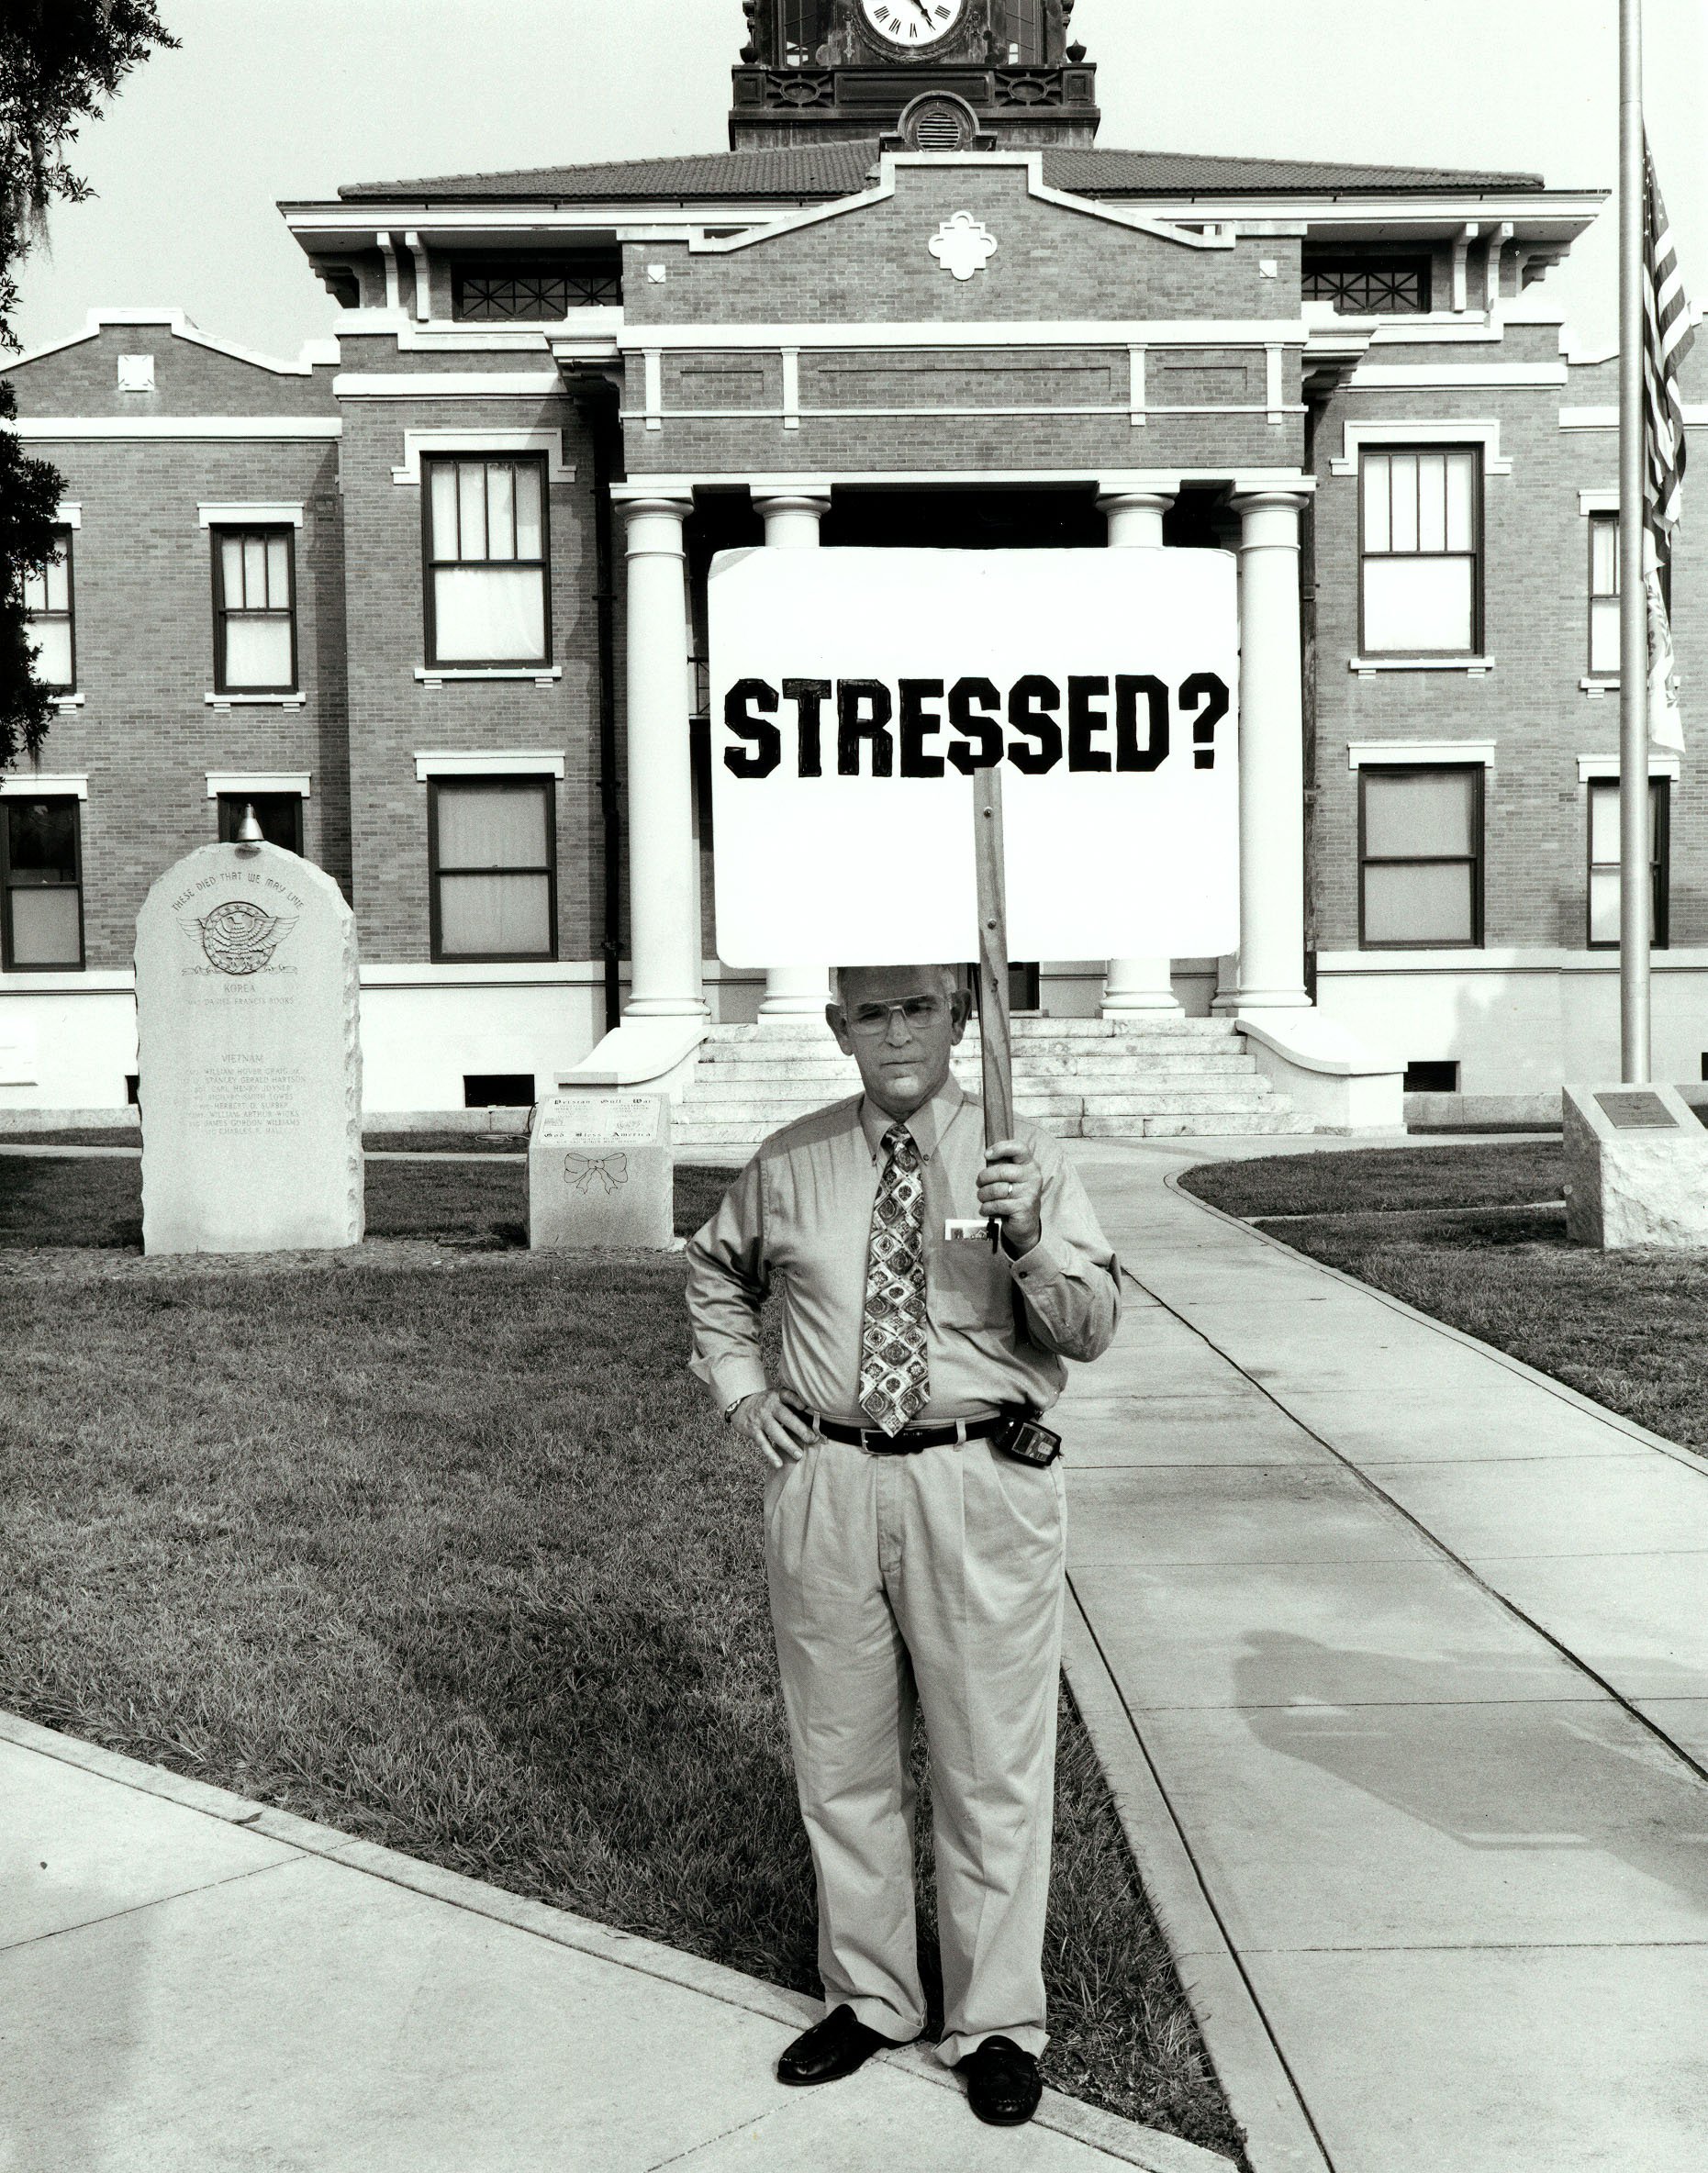 Stressed, Florida, 2005 